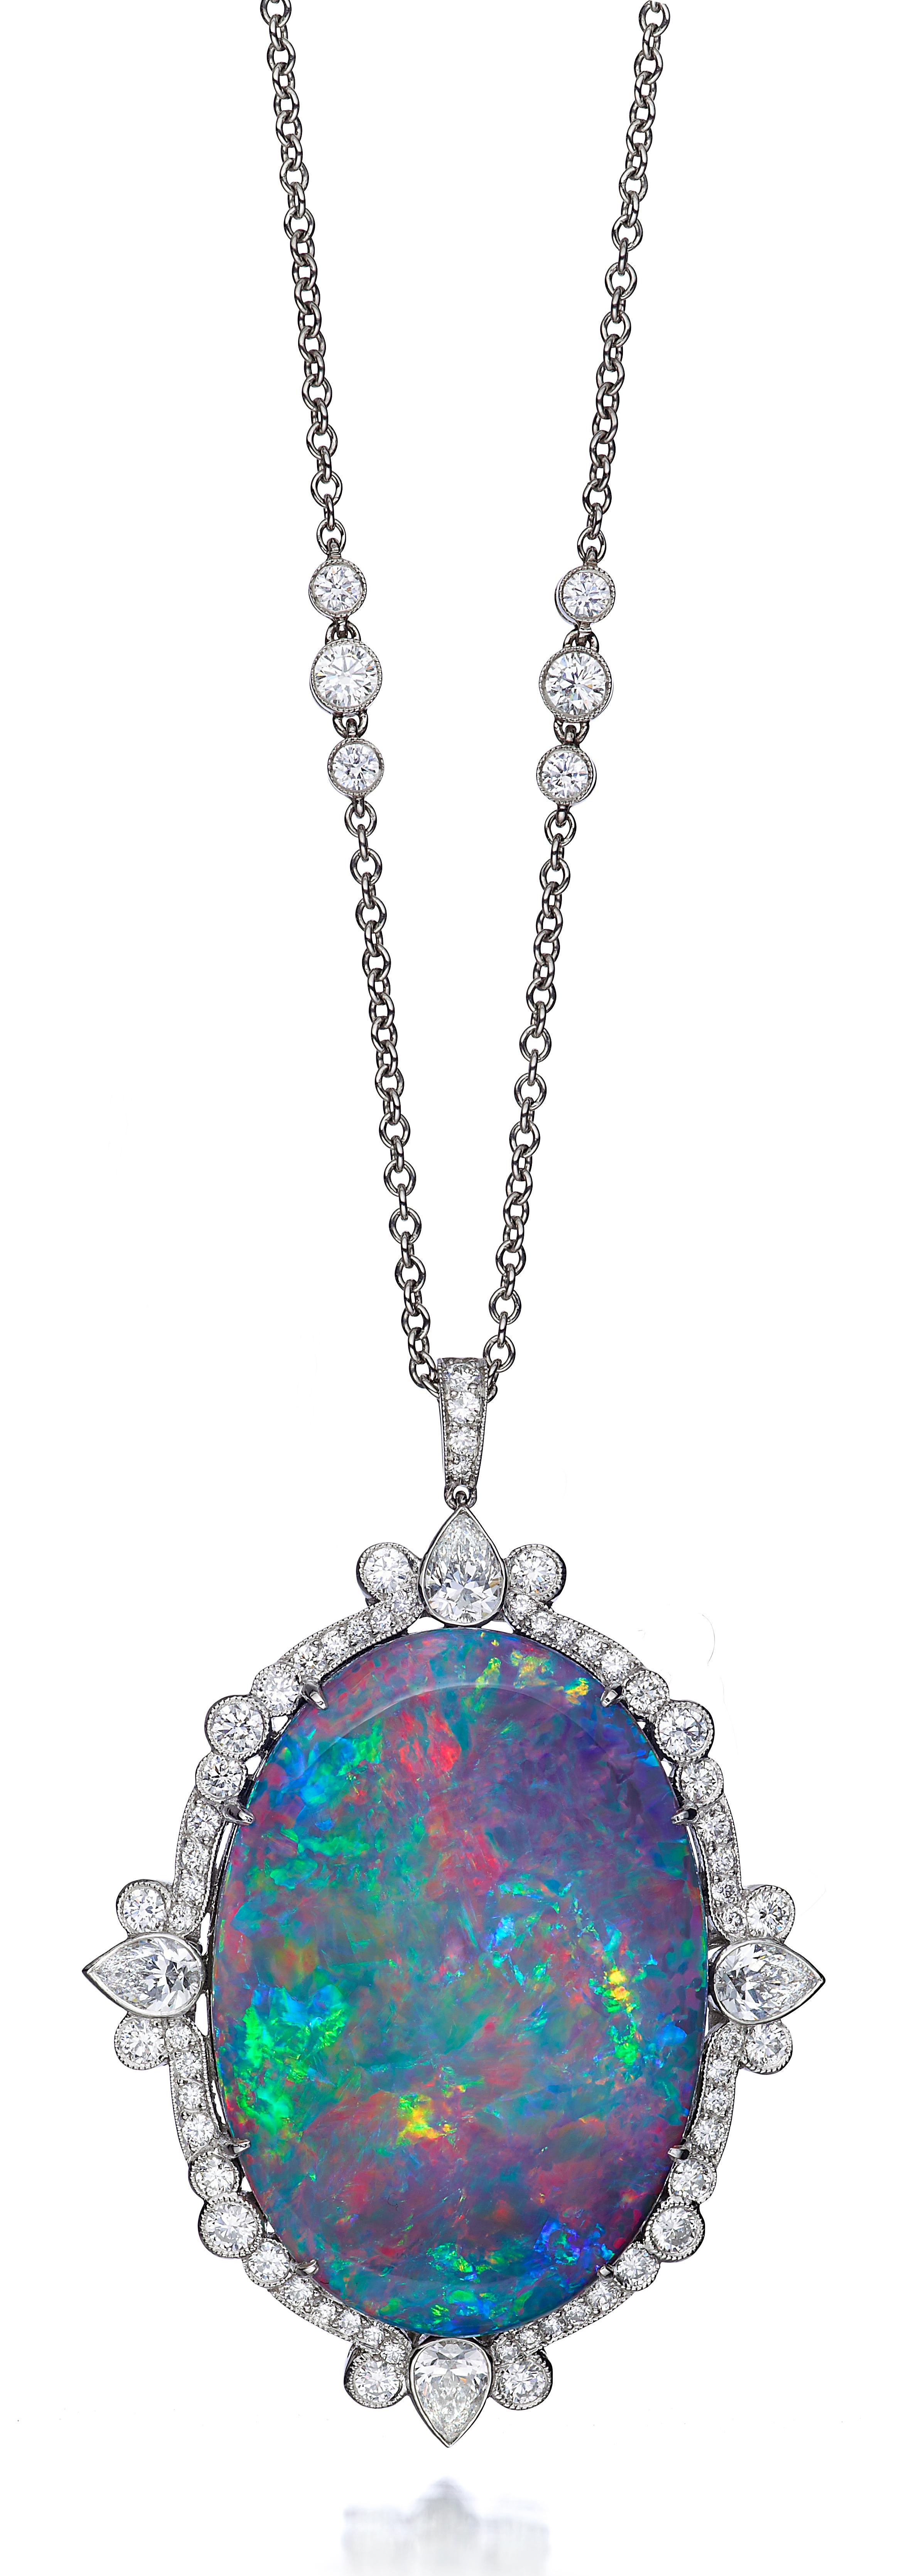 34 carat opal